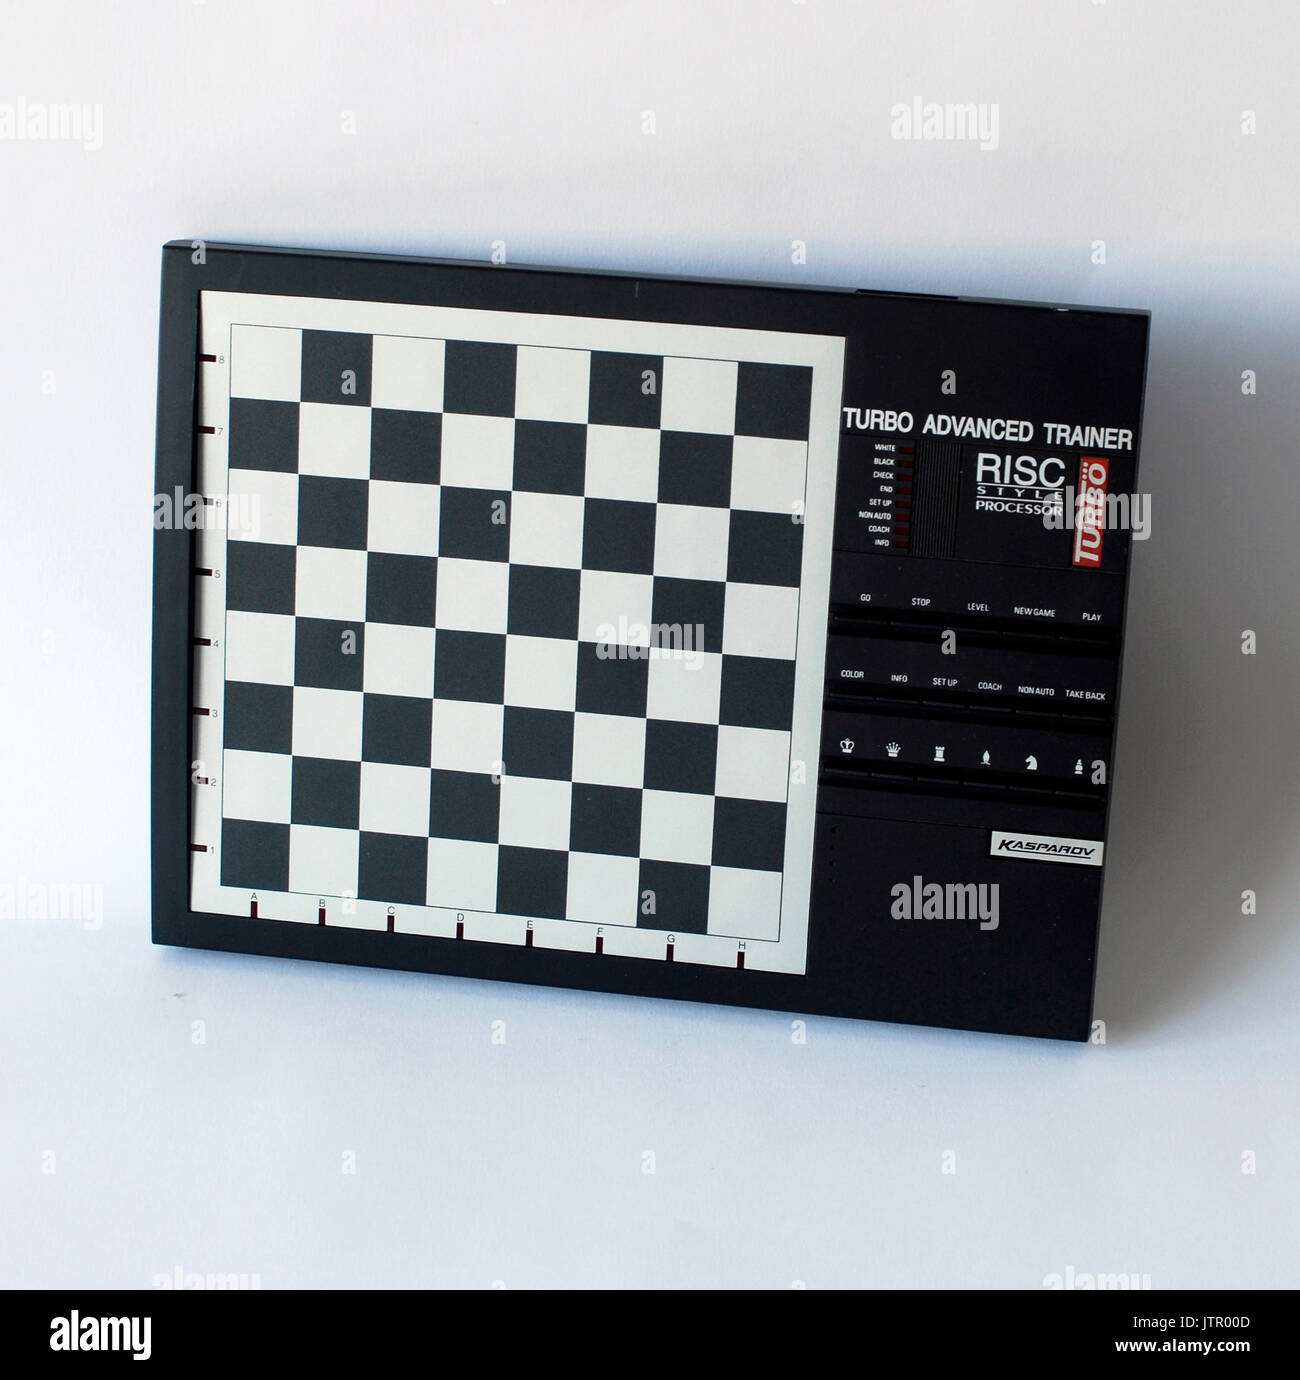 Electronic chess Saitek Kasparov Turbo Advanced Trainer. Risc Style Procesor. Made in China Stock Photo